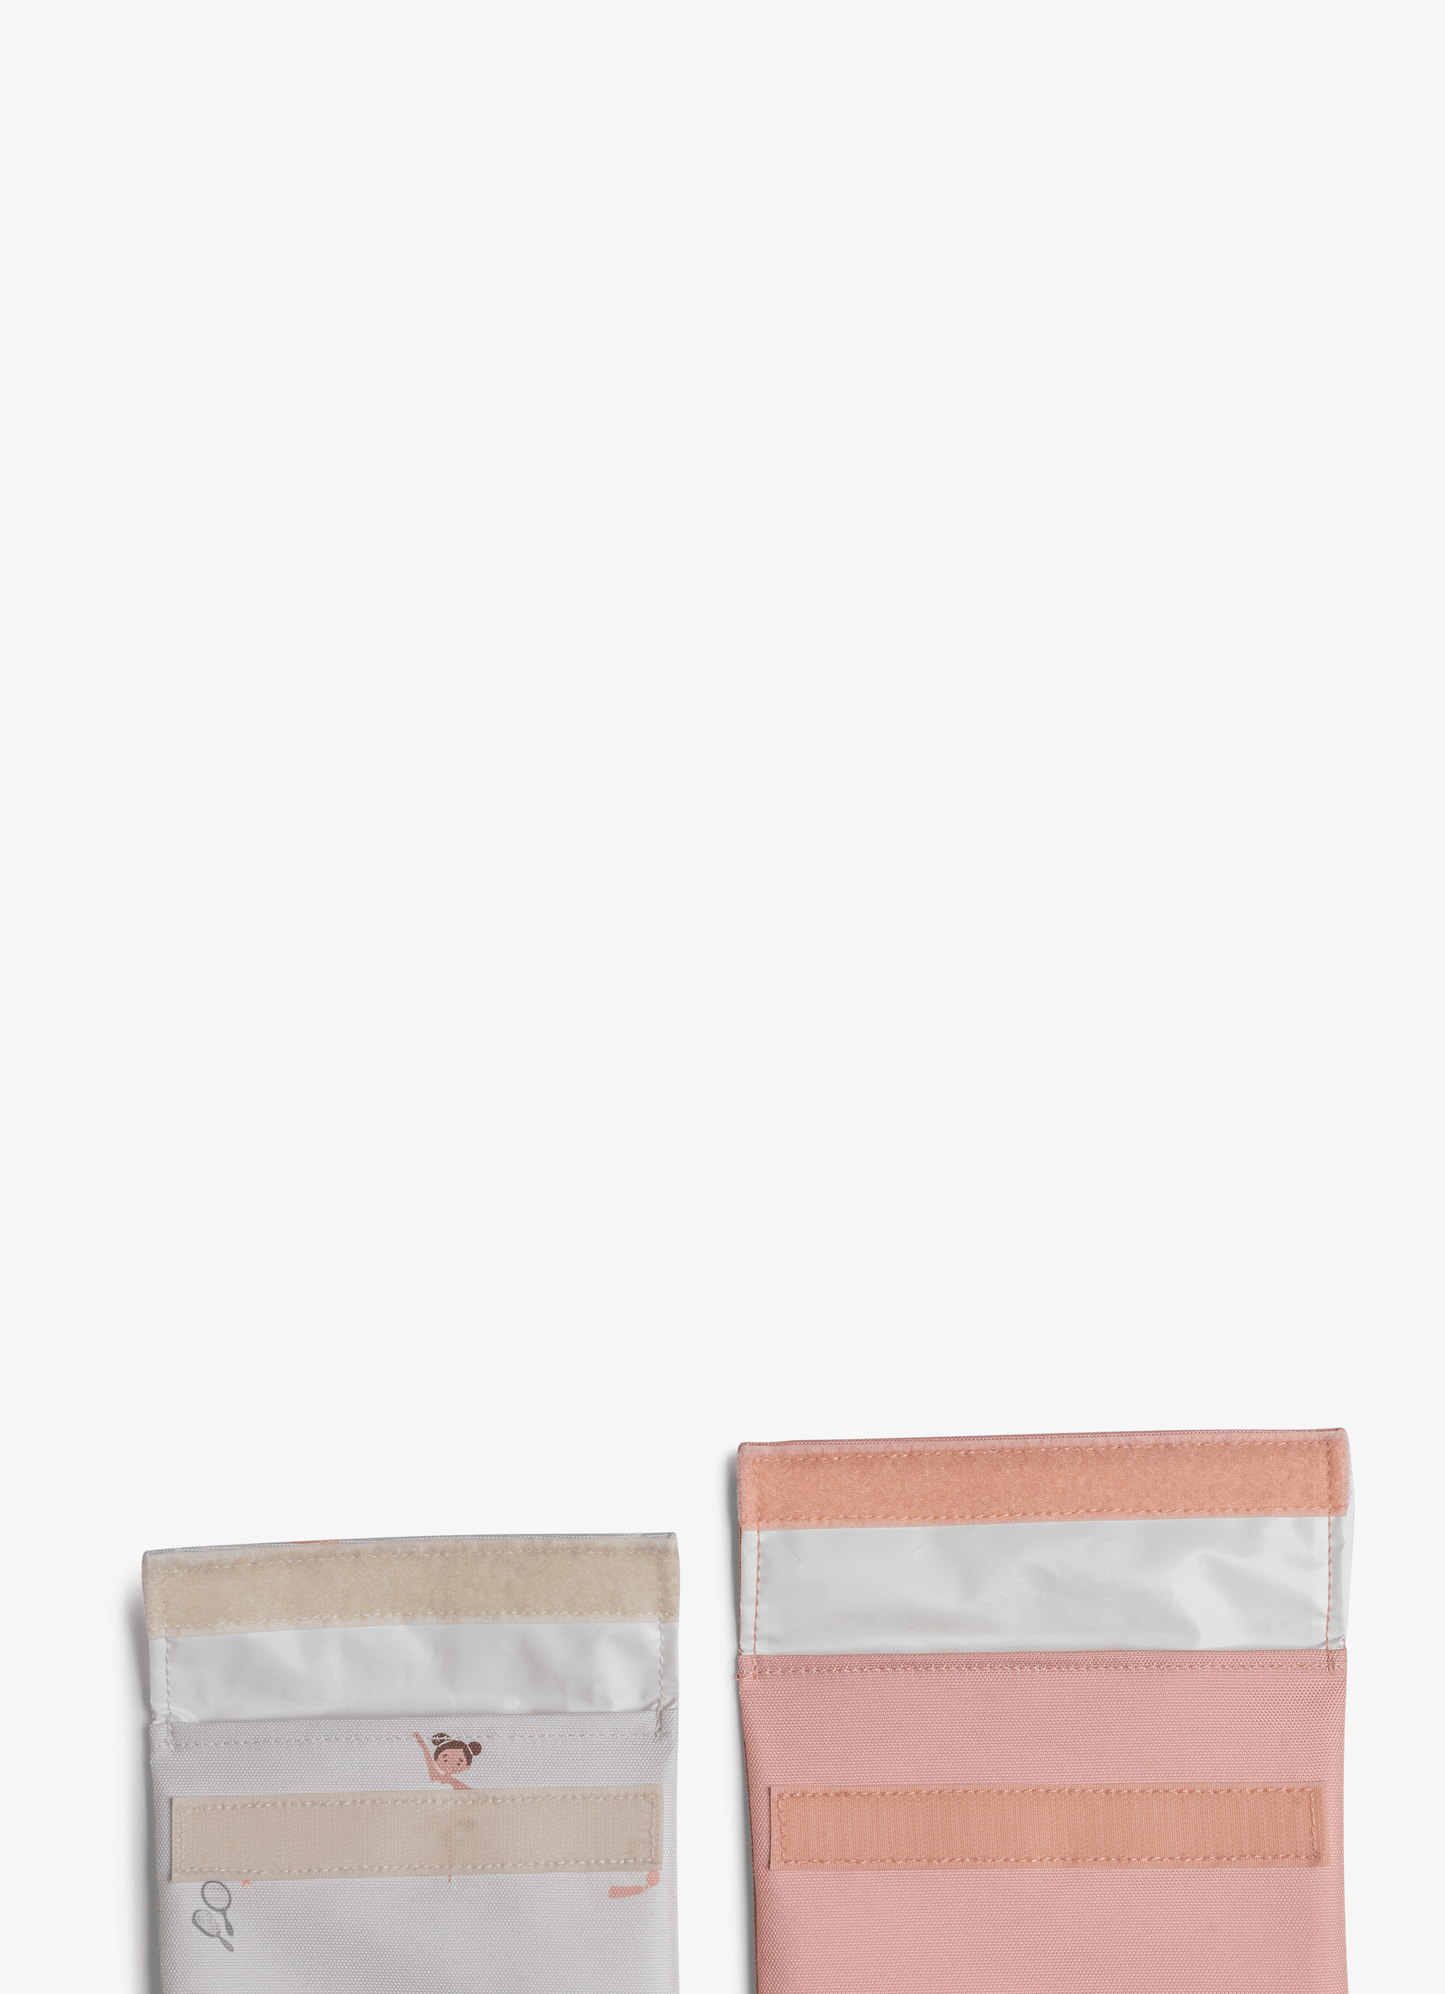 Reusable Sandwich Bag - Set of 2 - Ballerina/Blush Pink